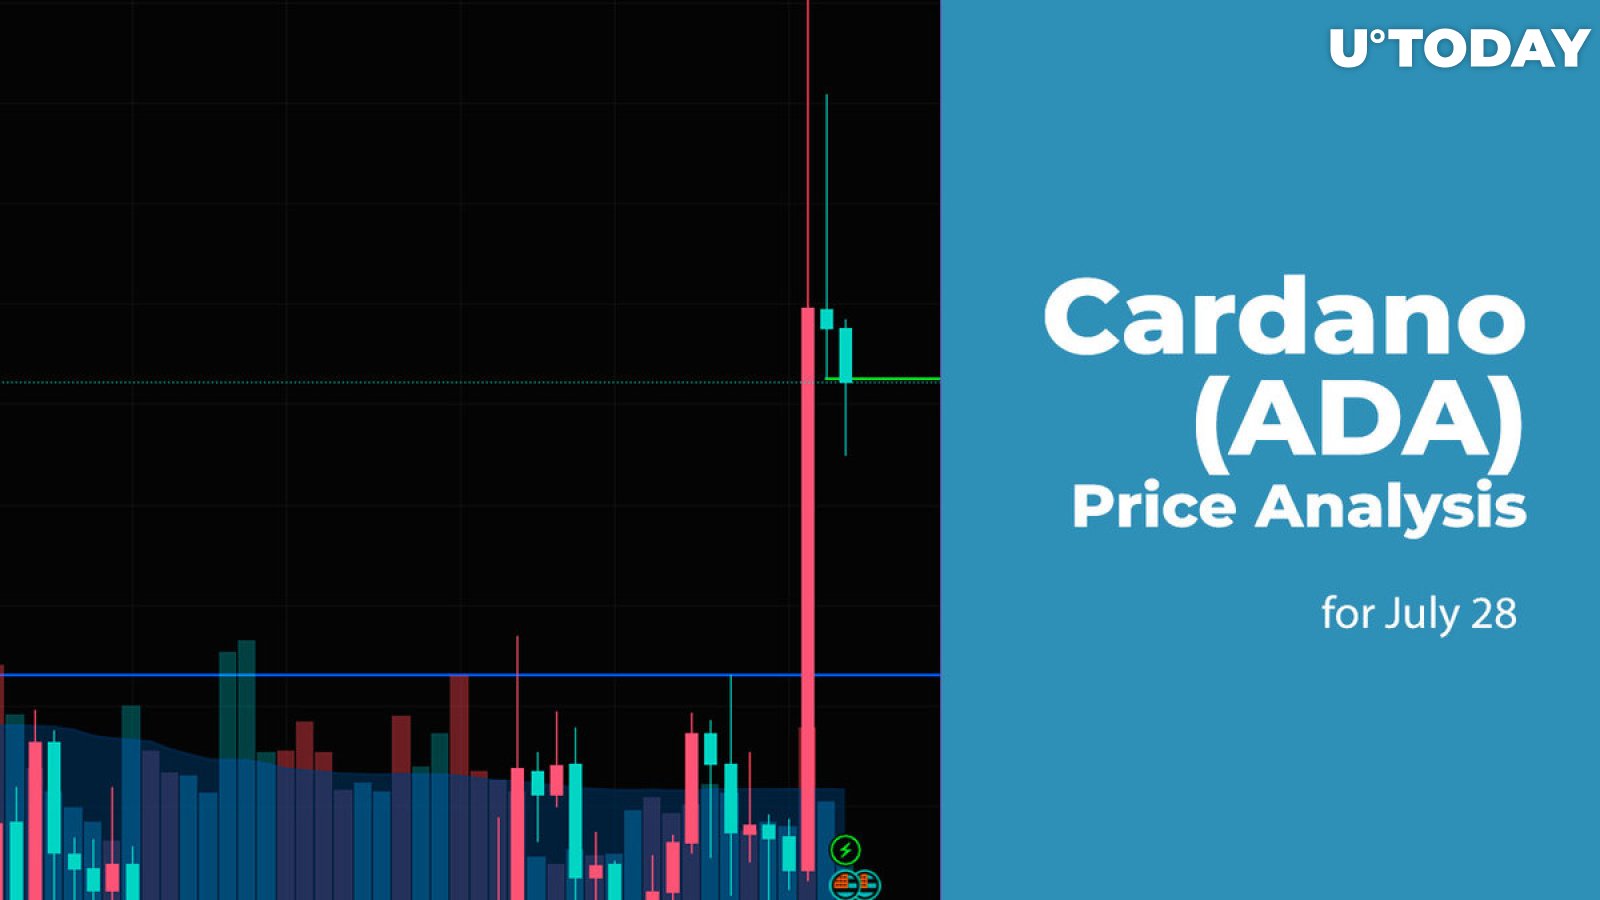 Cardano (ADA) Price Analysis for July 28